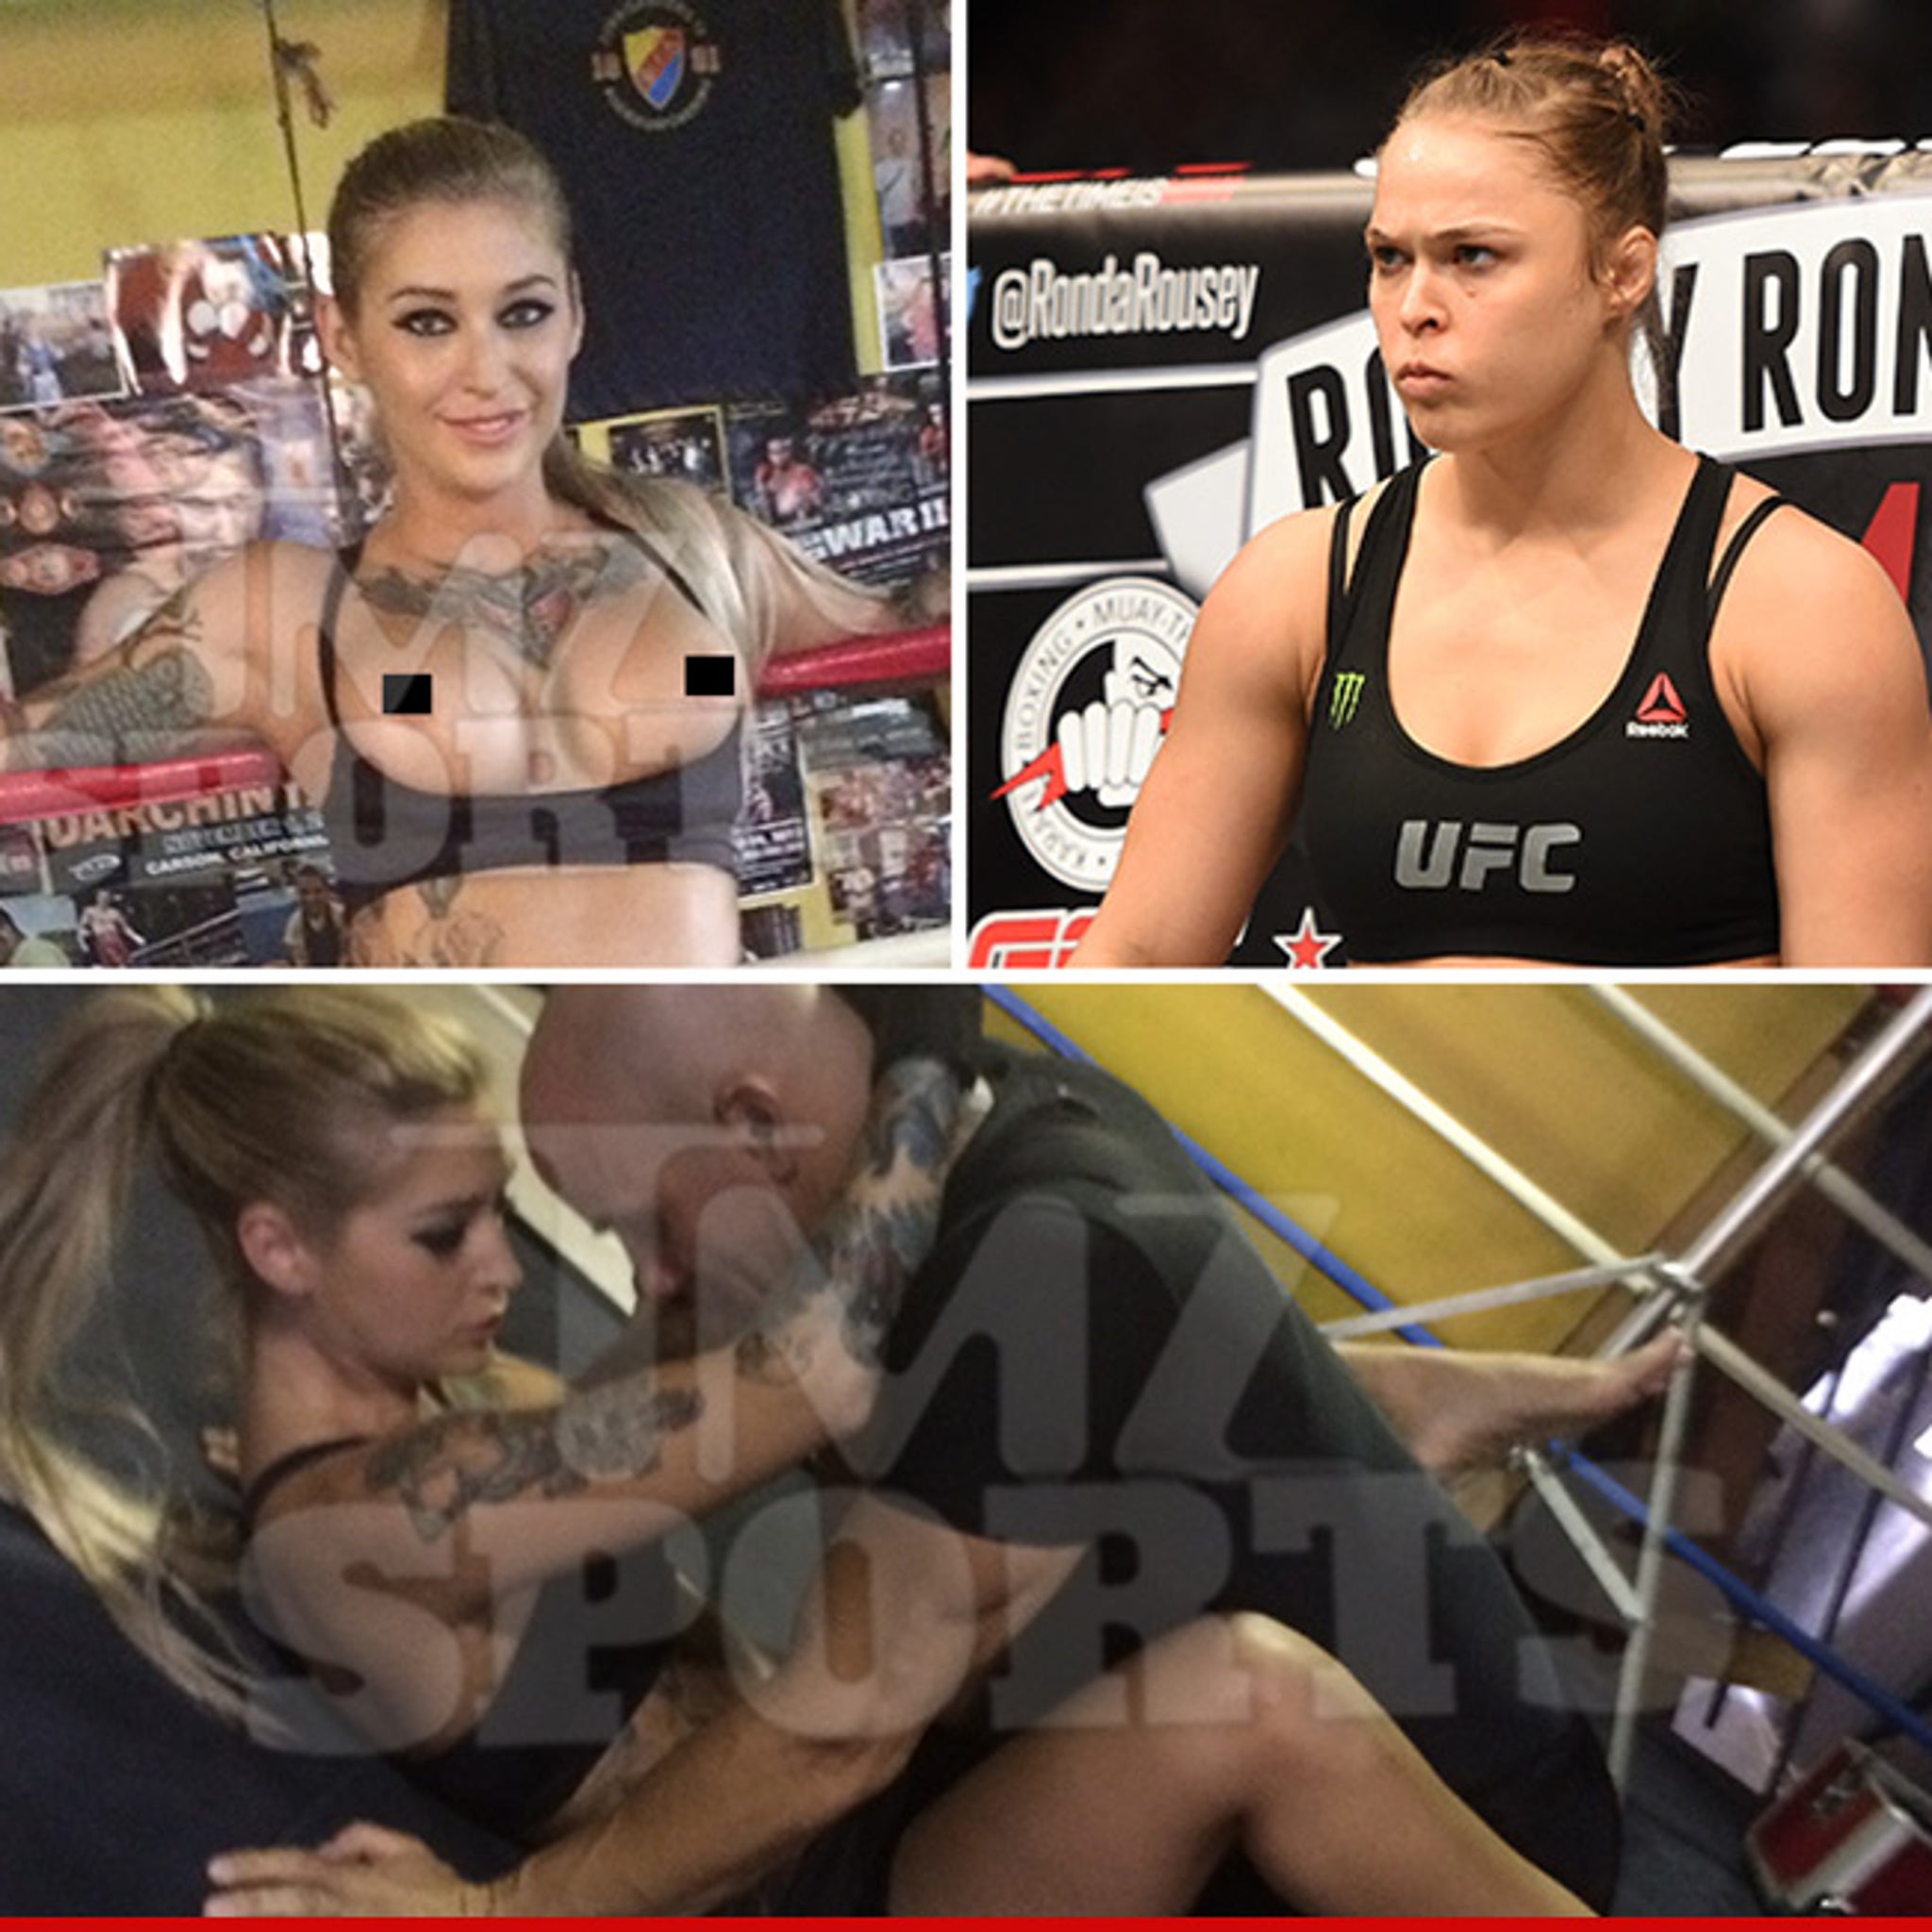 Wwe Star Ronda Rouse Porn Video - Ronda Rousey -- Hardcore Porn Parody ... 'Ronda ArouseMe'